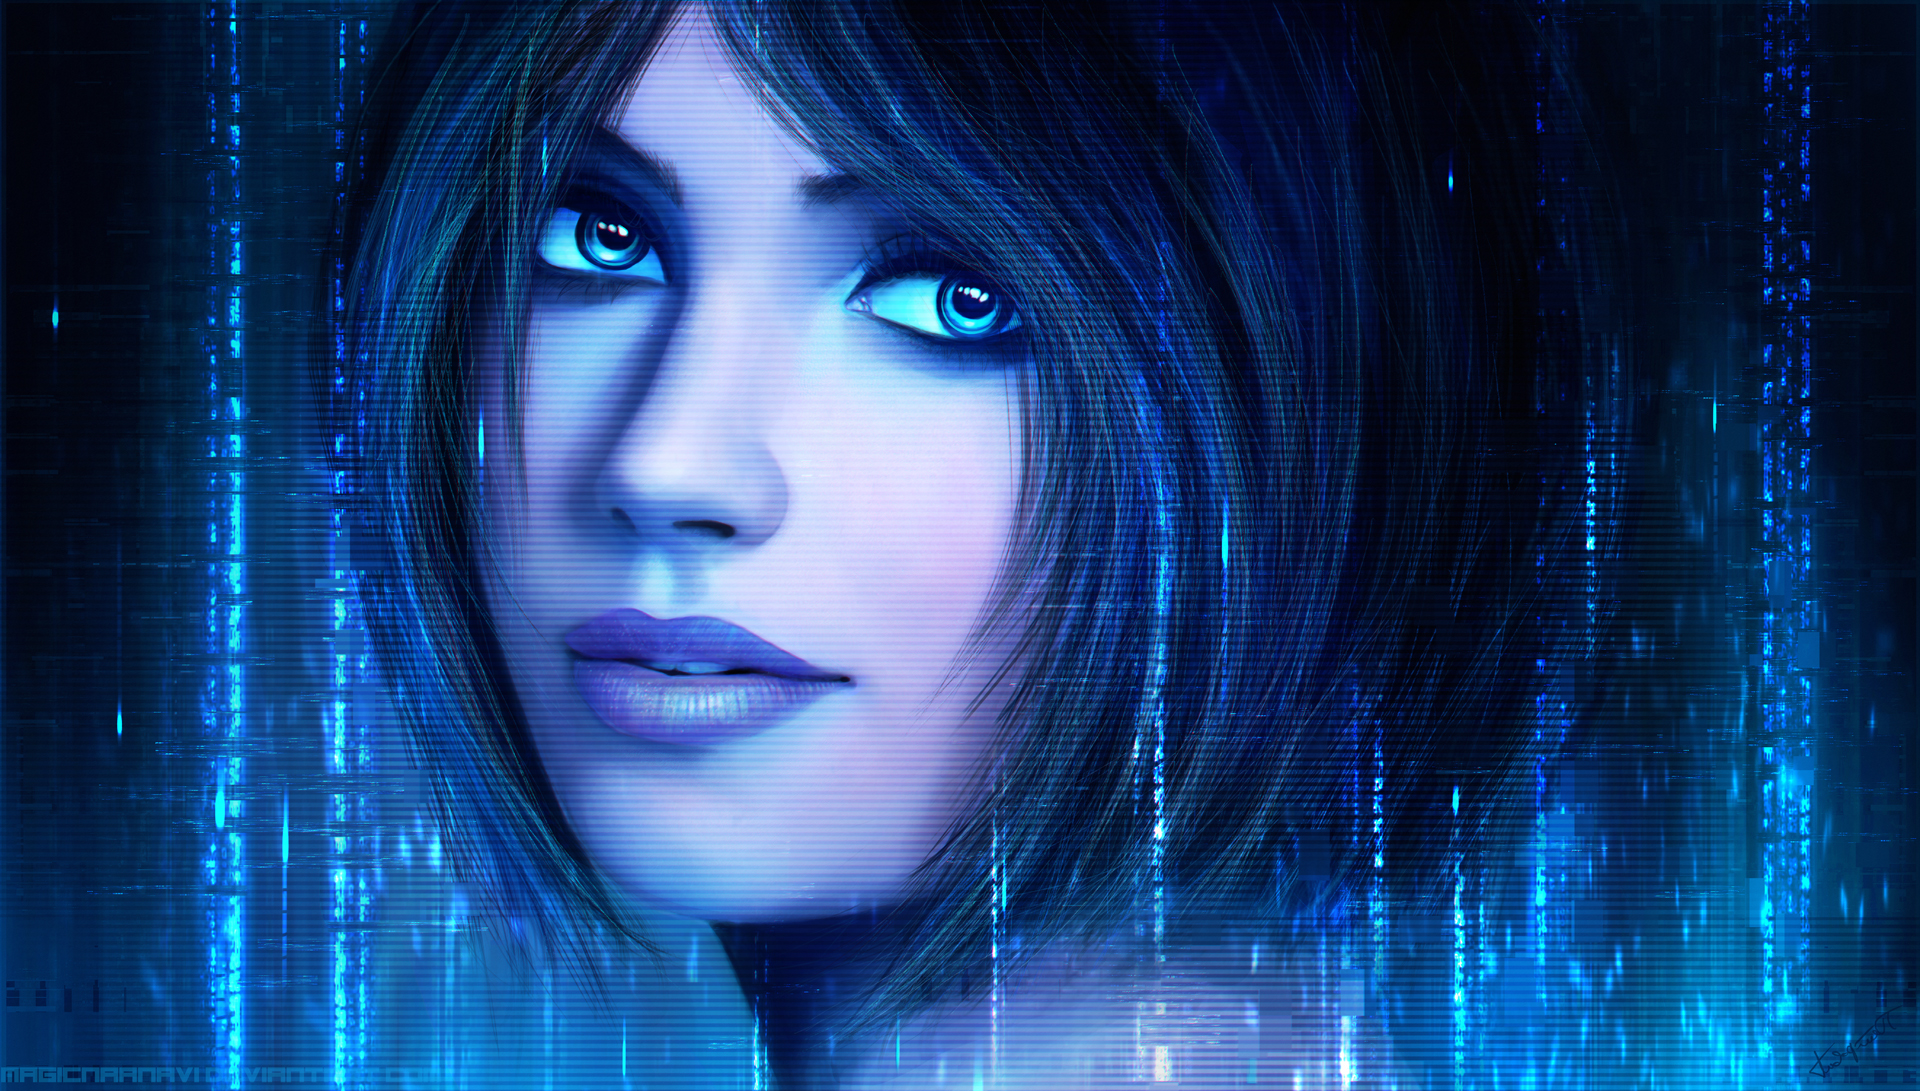 Cortana by MagicnaAnavi